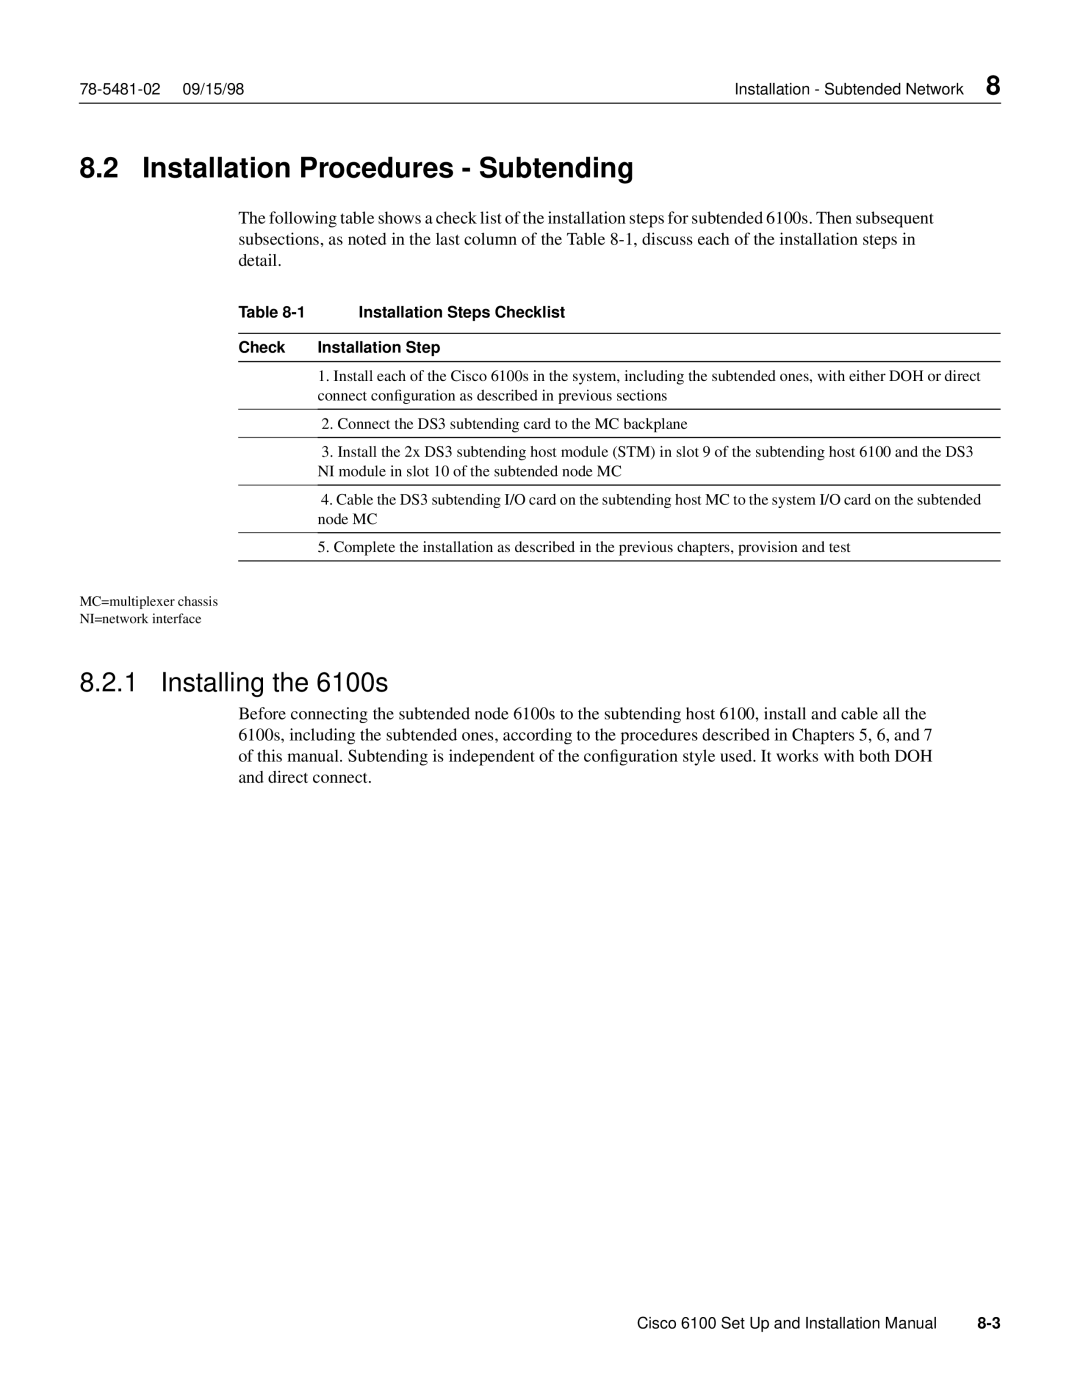 Cisco Systems installation manual Installation Procedures - Subtending, Installing the 6100s 